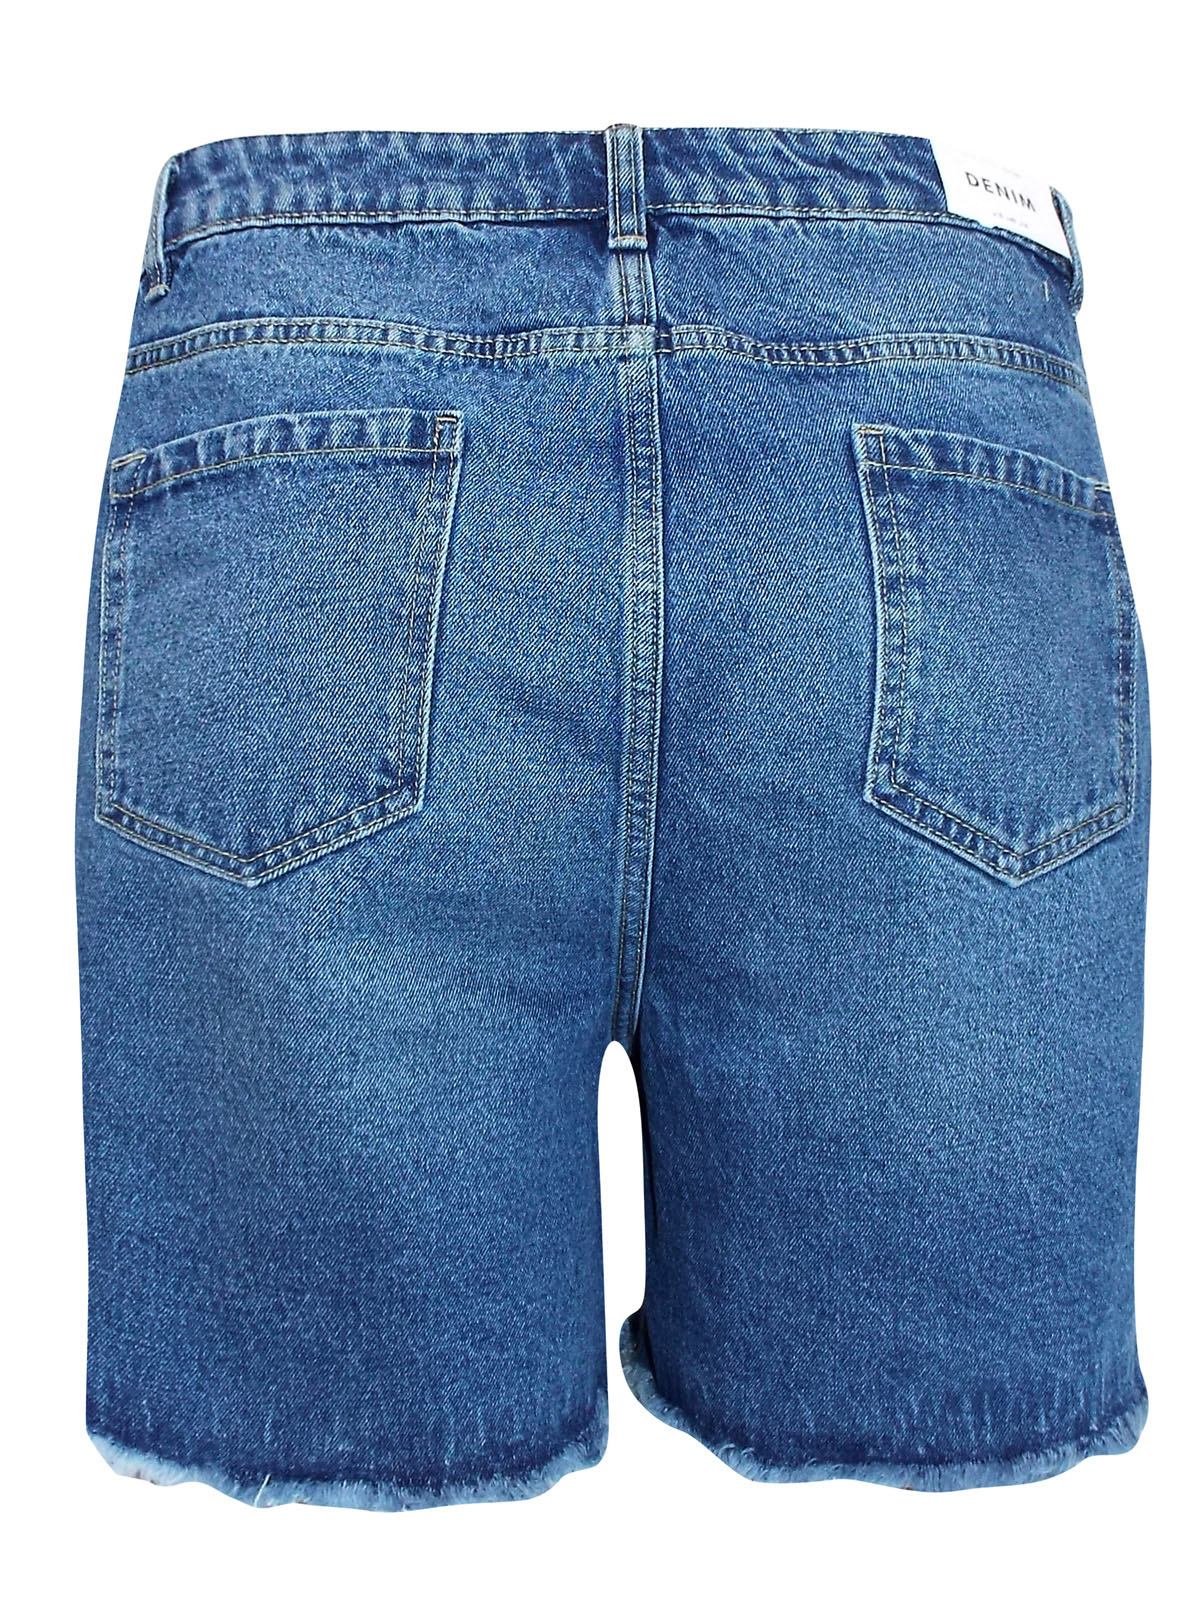 N3w L00k Curve BLUE Cotton Boyfriend Denim Shorts - Plus Size 18 to 26